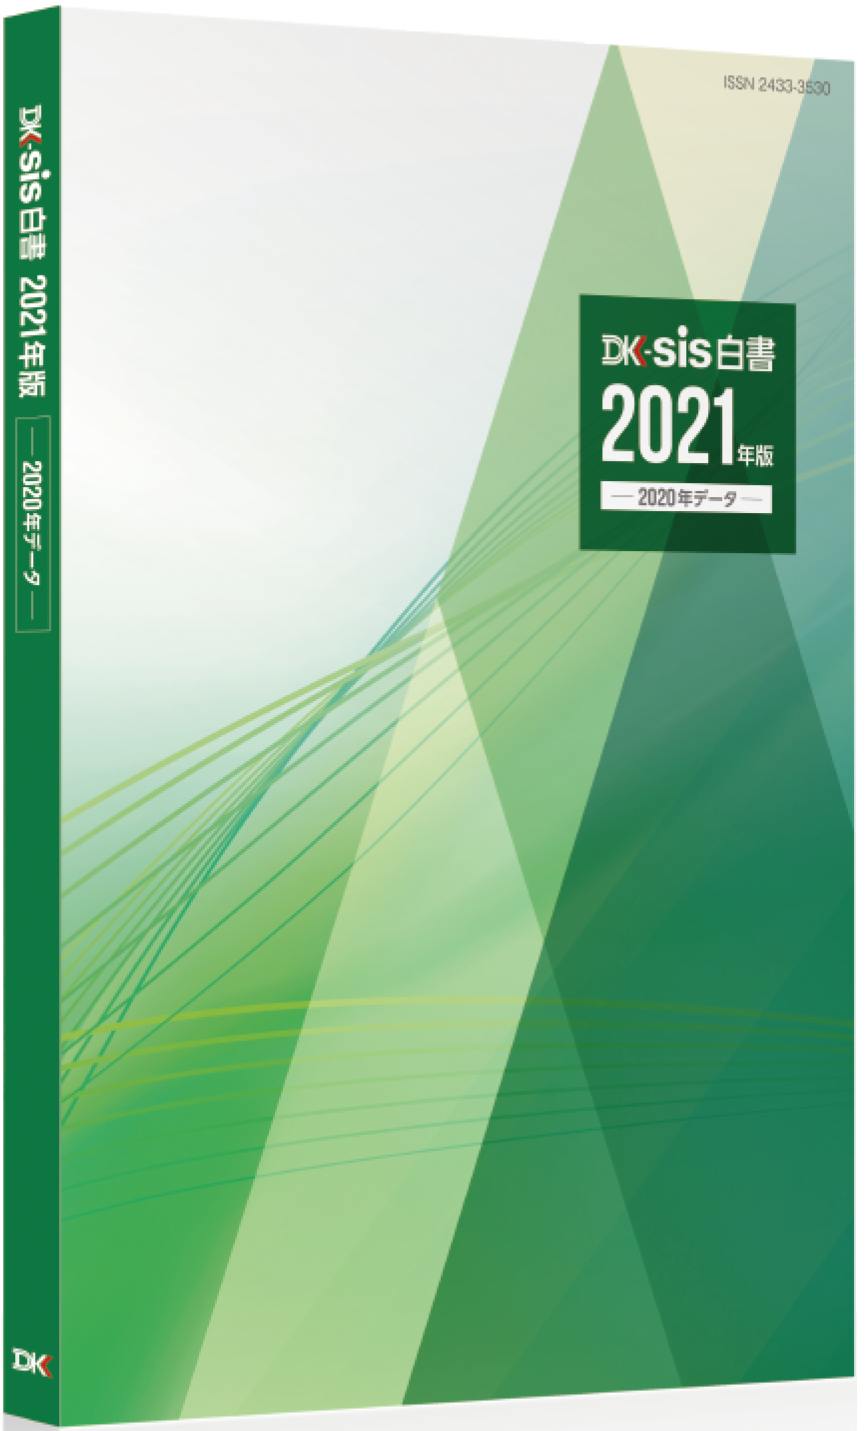 月刊遊技通信 DK-SIS白書2021年版－2020年データ－